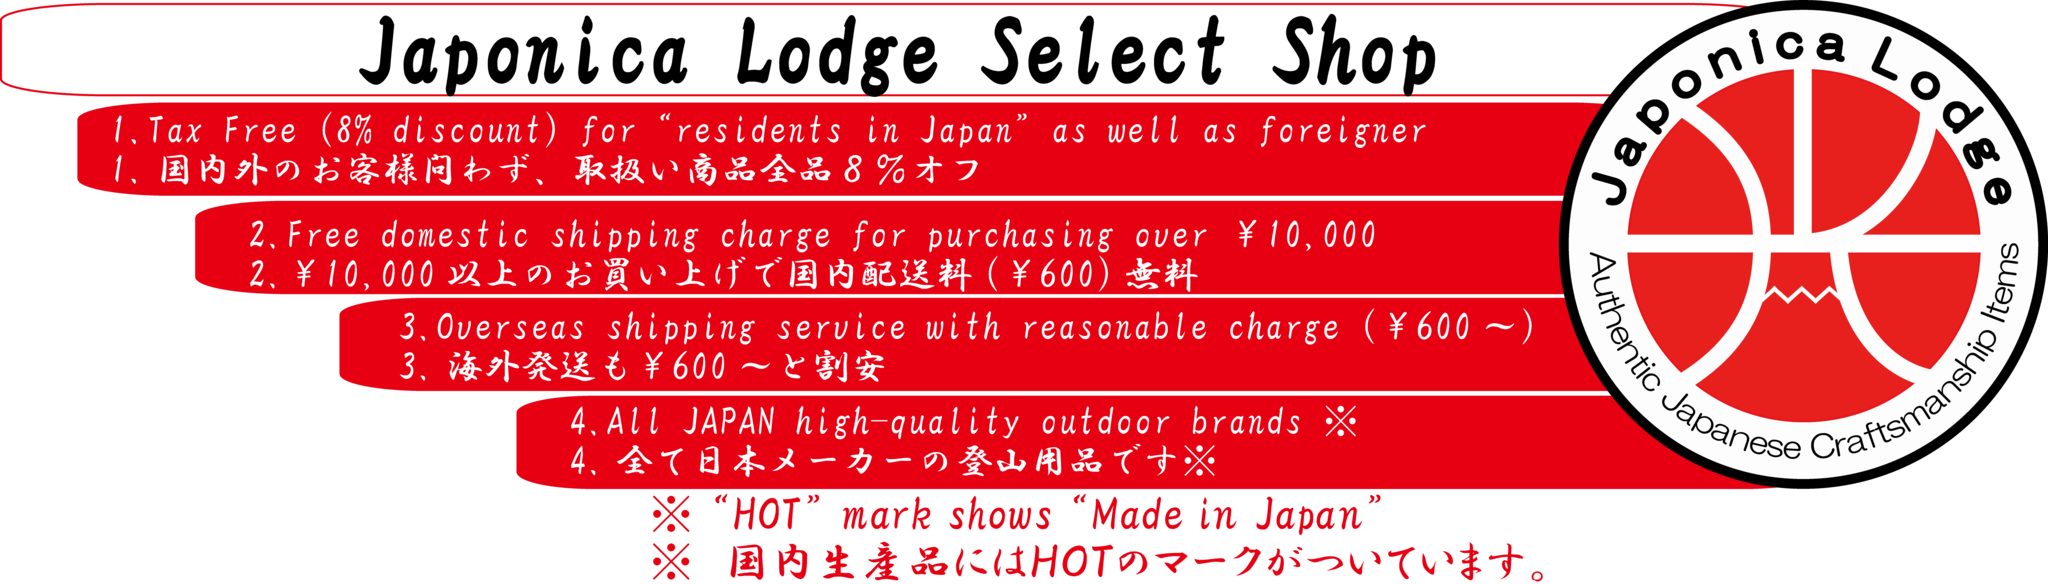 Japonica Lodge Select